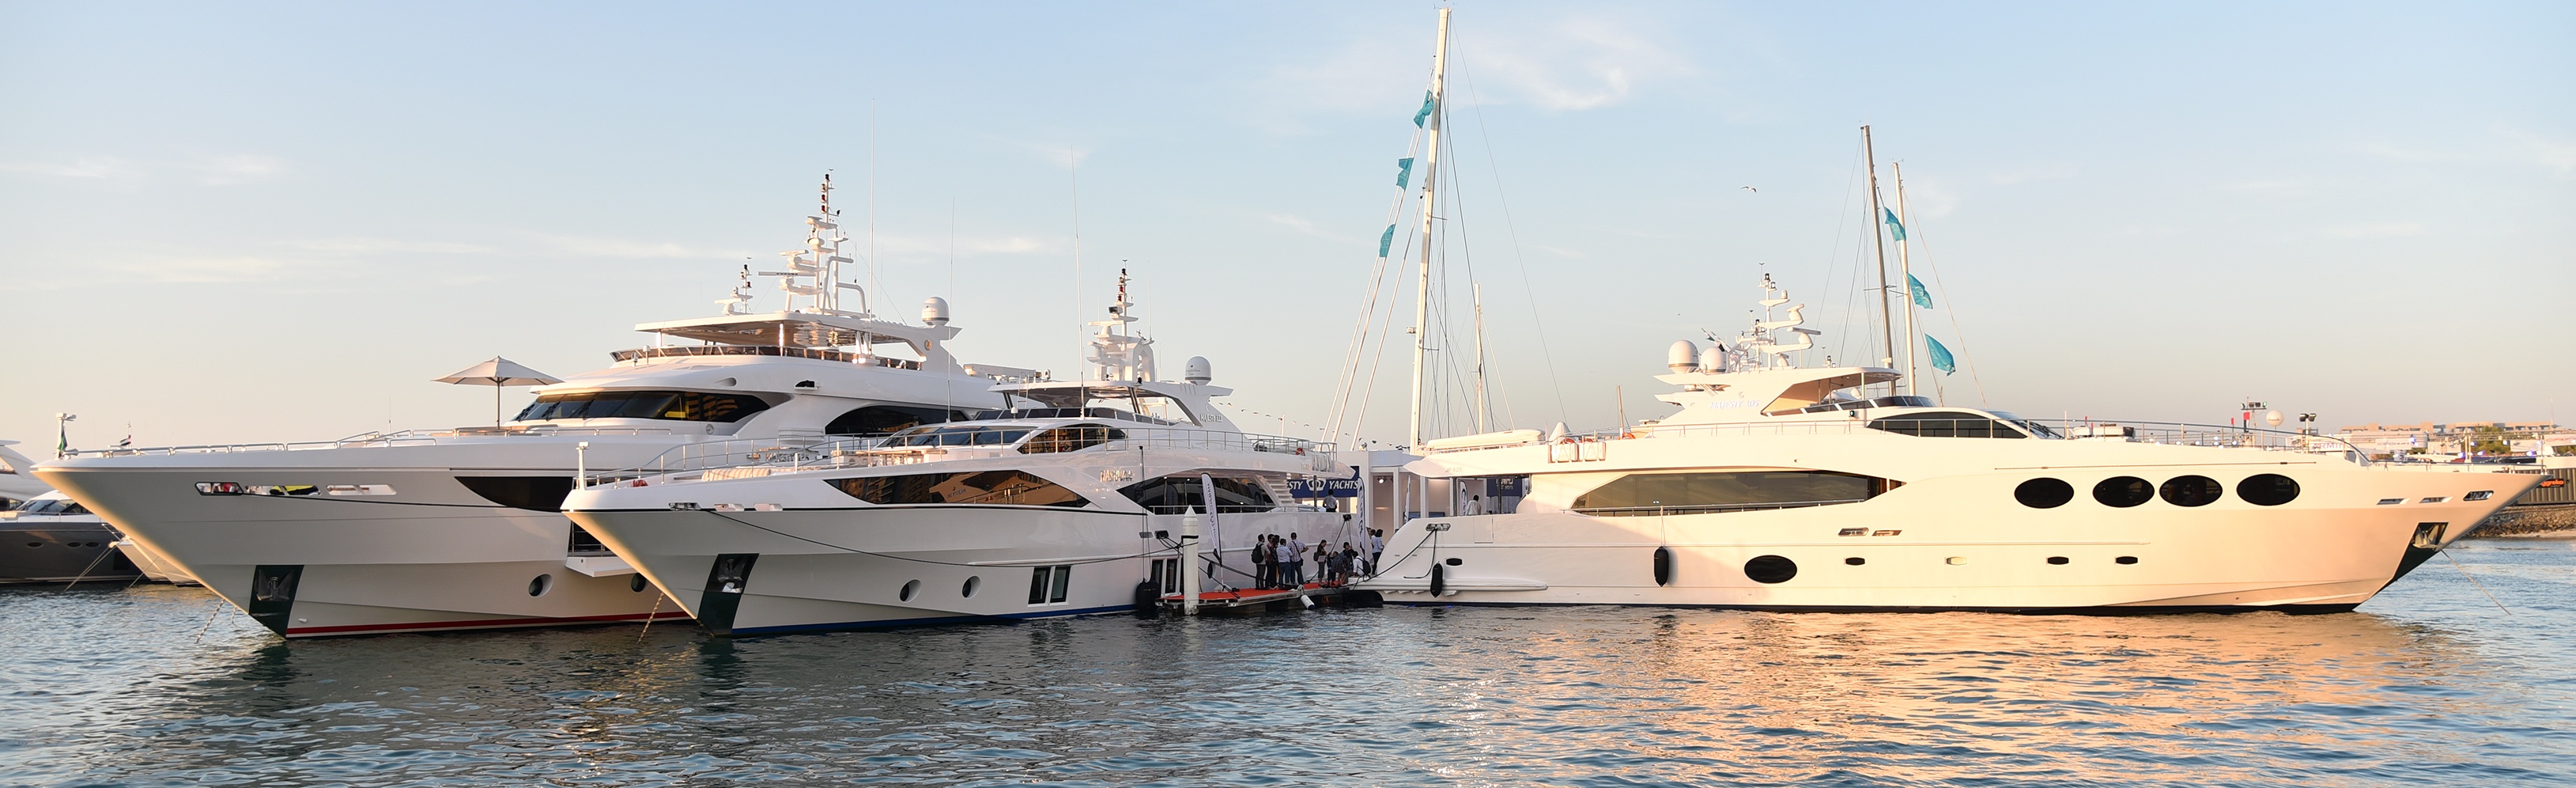 Dubai-Boat-Show-2016-1.jpg